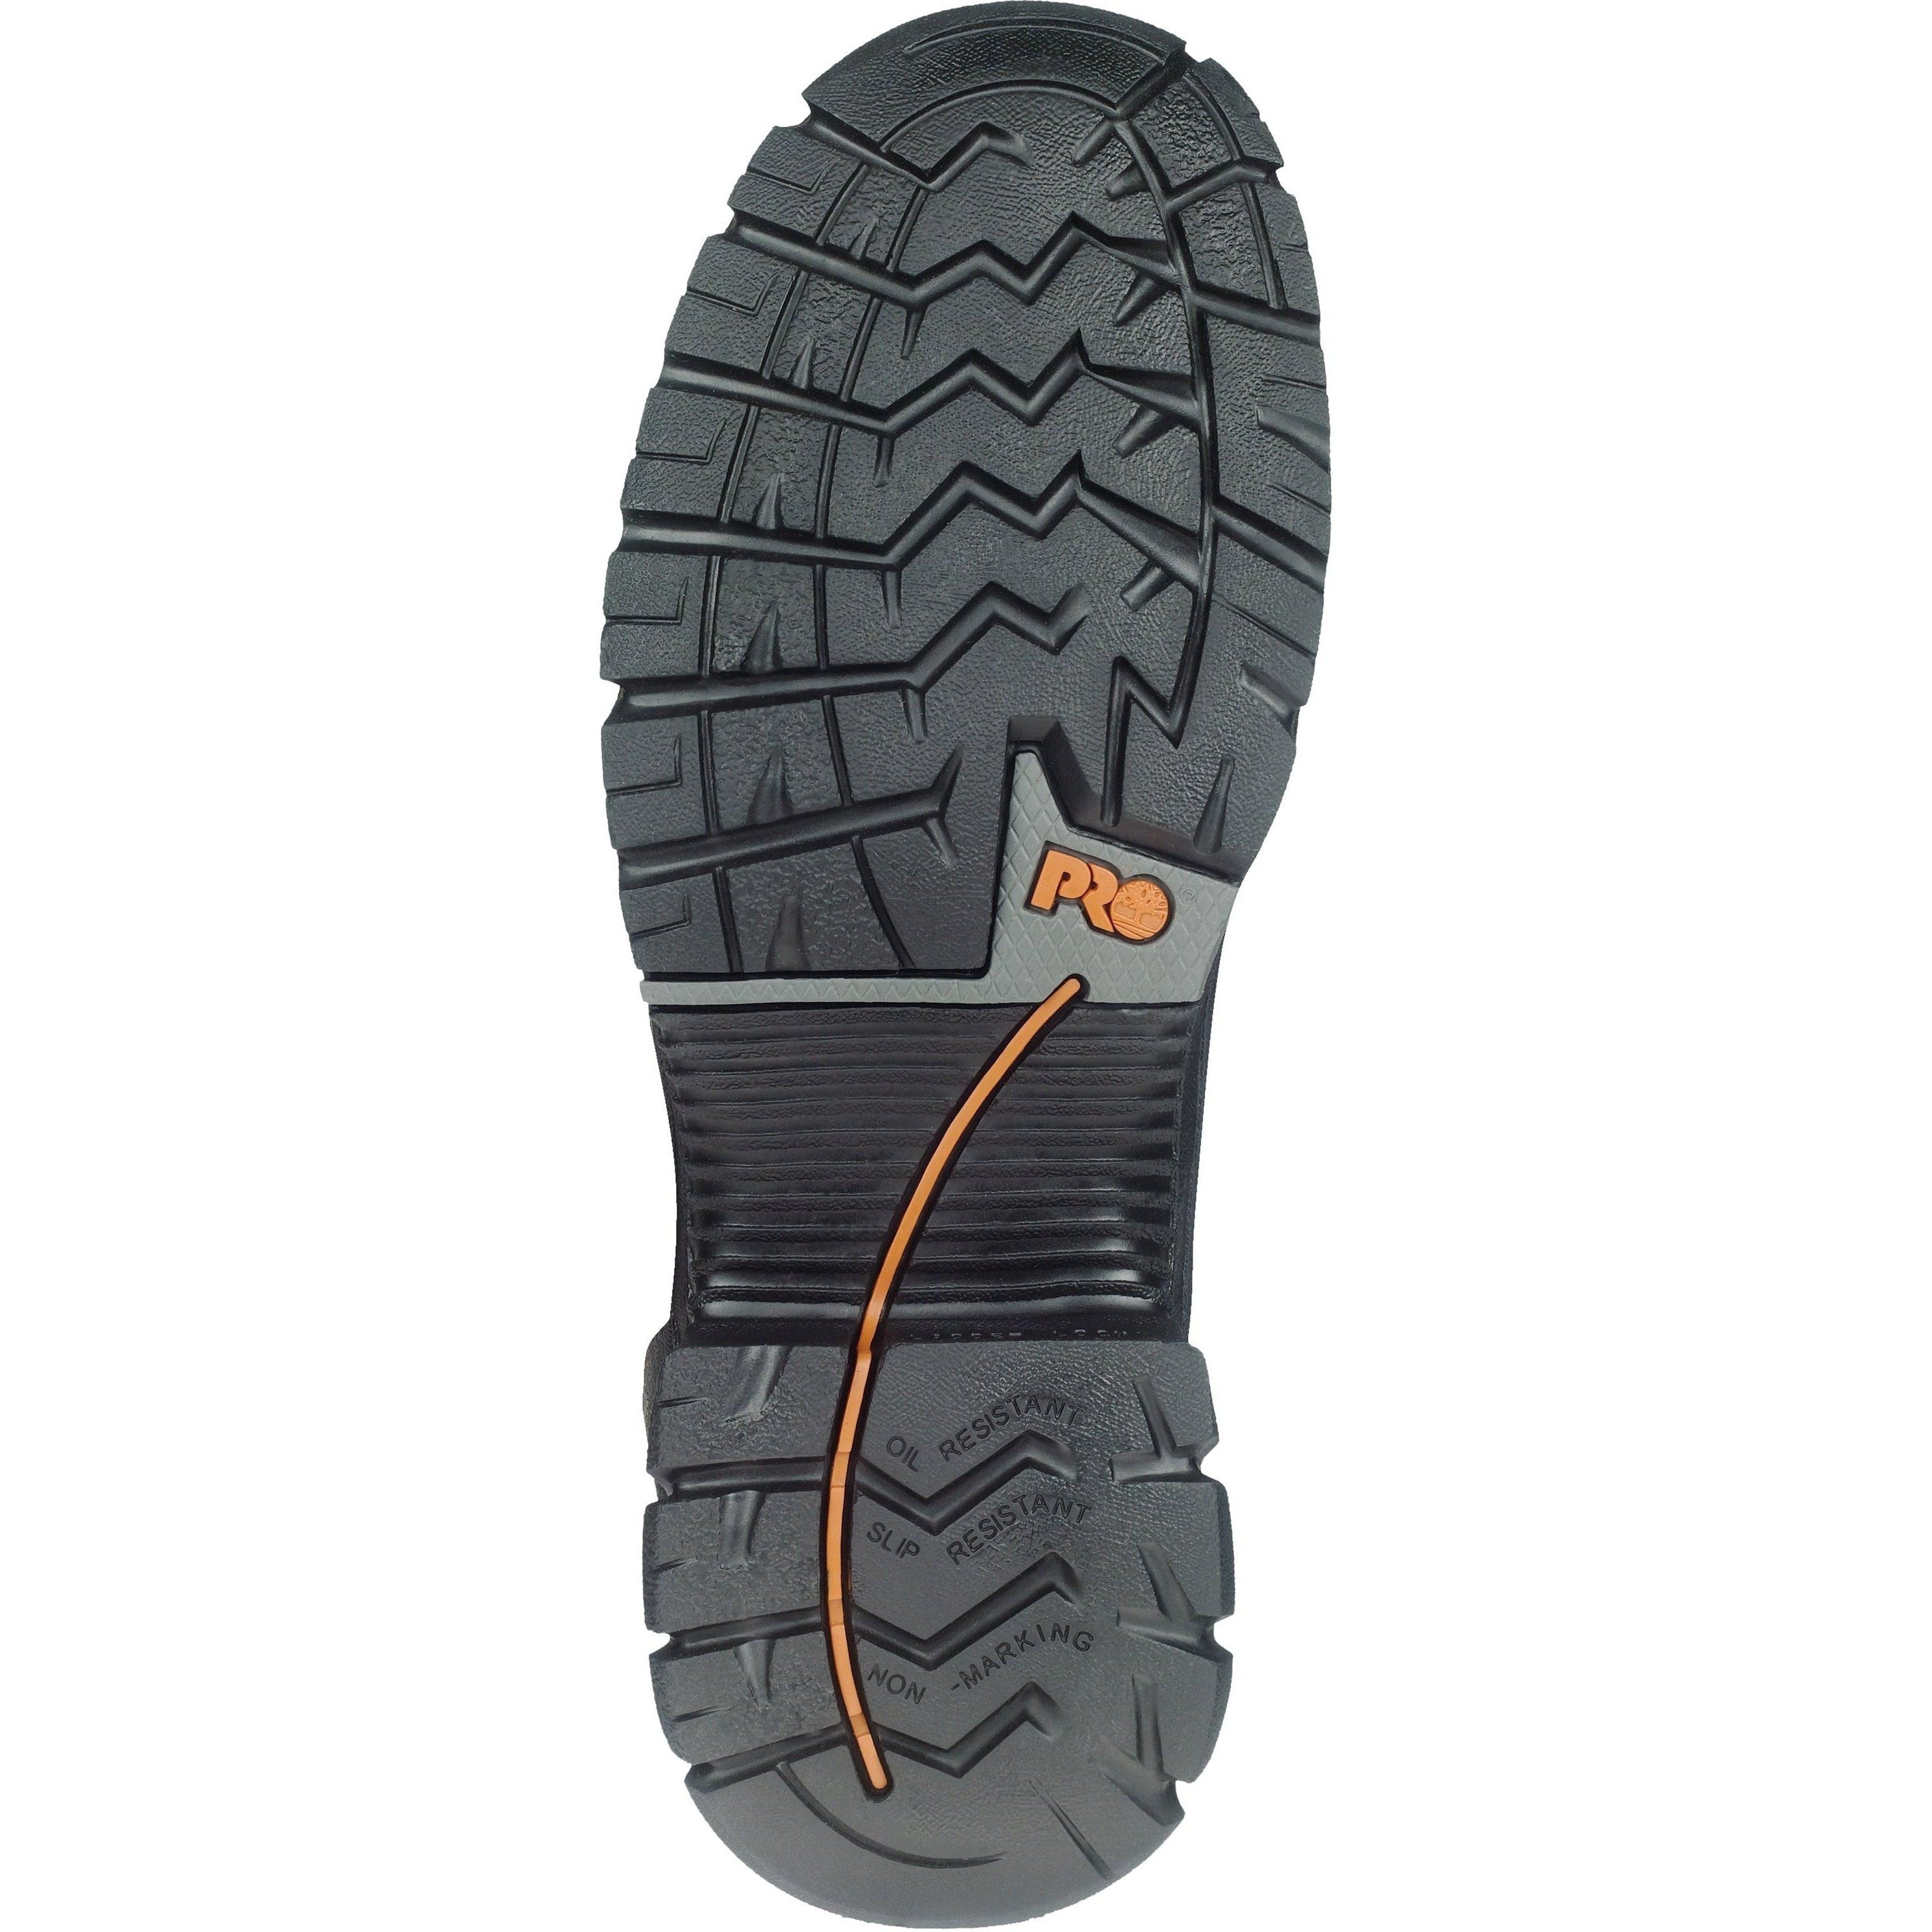 Timberland PRO Men's Endurance 6" Soft Toe Work Boot - TB089631214  - Overlook Boots